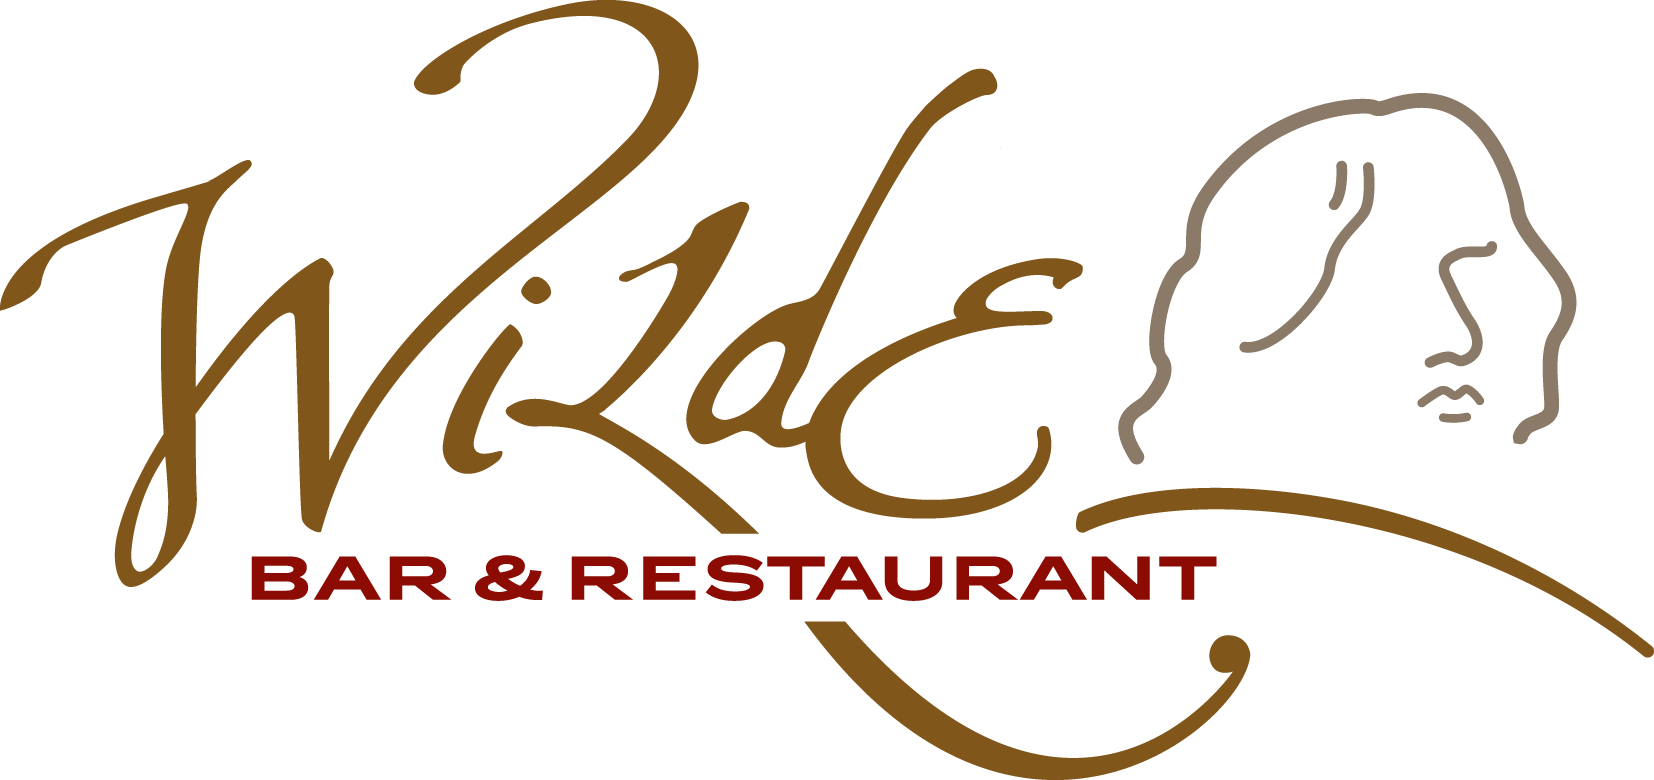 Wilde Bar & Restaurant Home